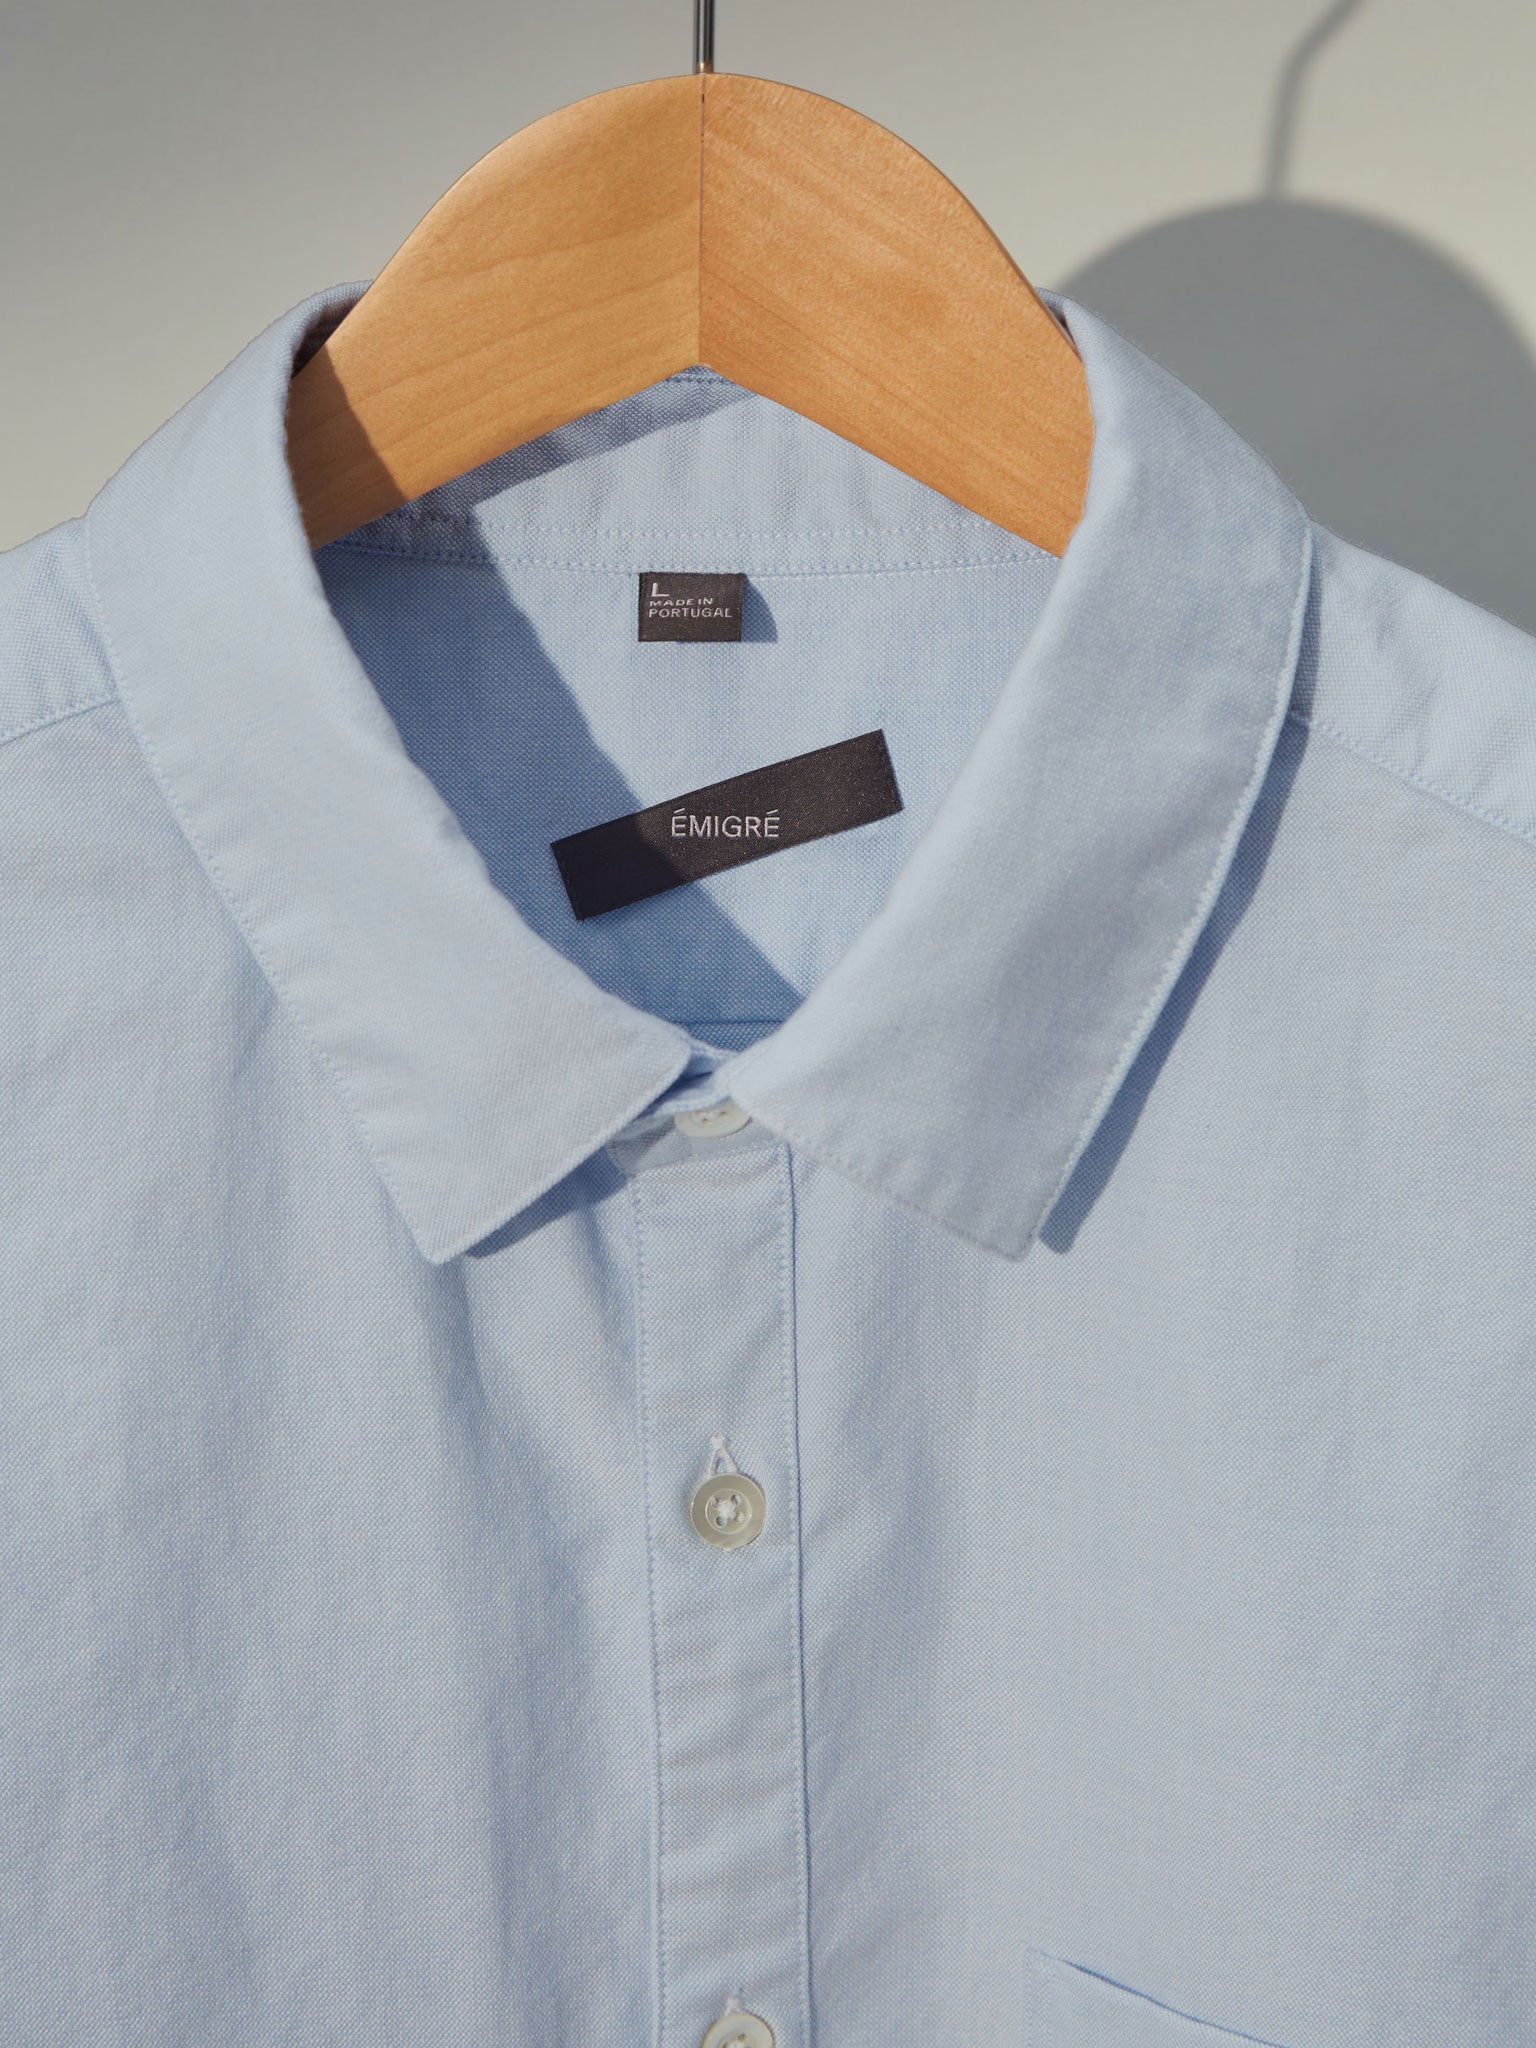 Men's blue button-down Oxford shirt